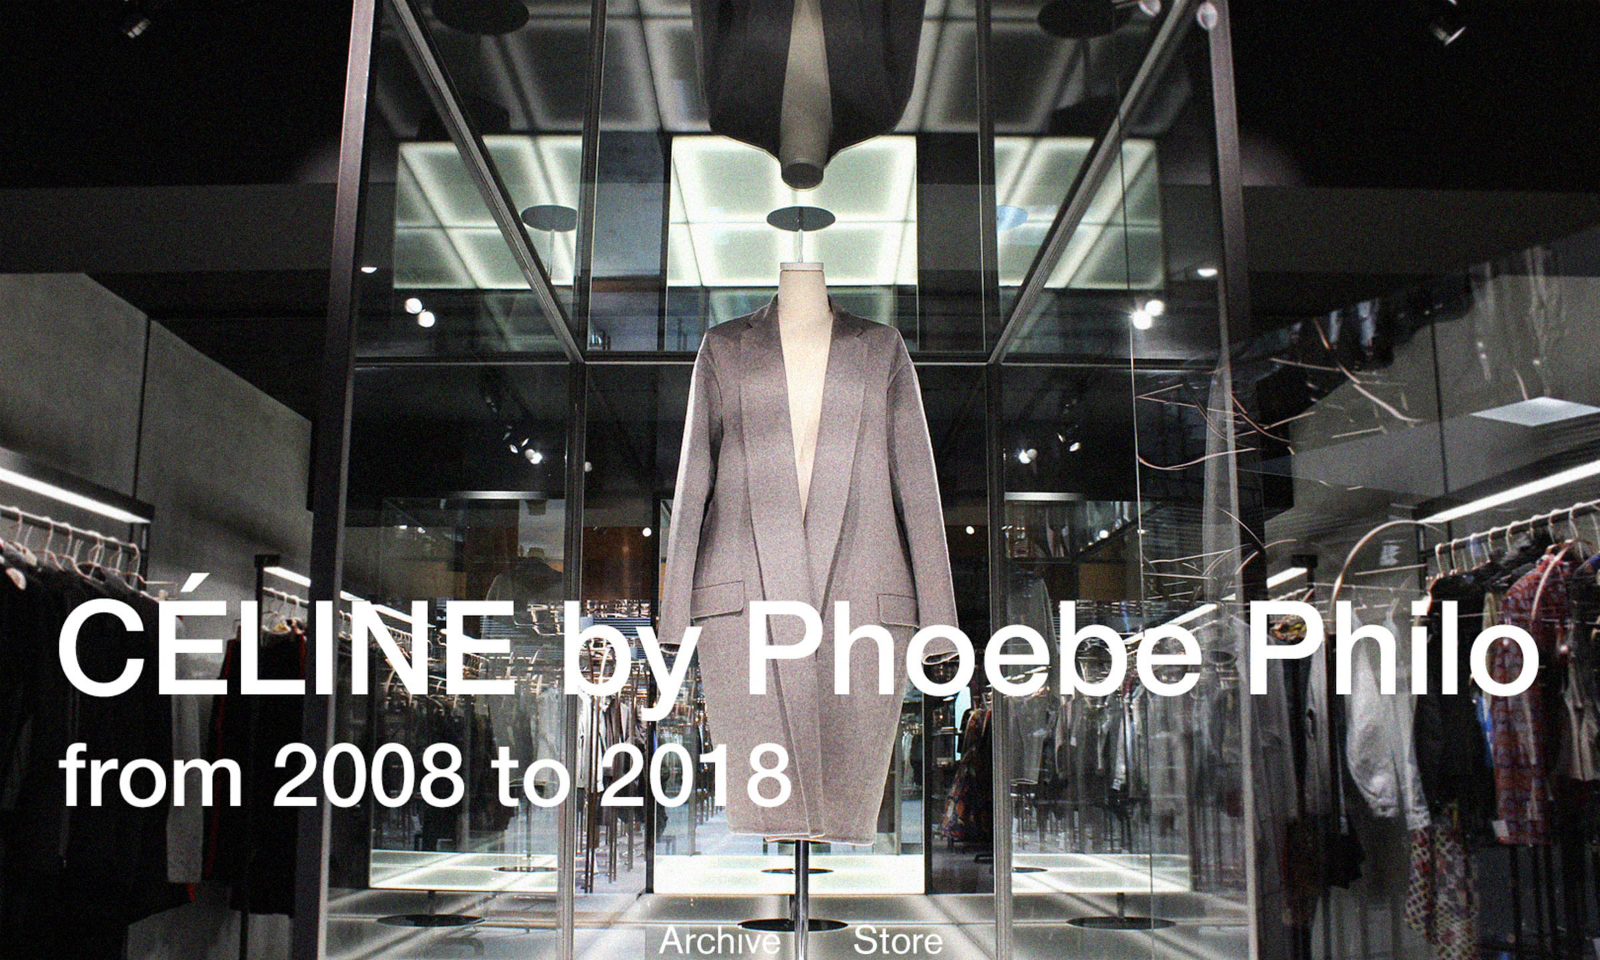 东京选品店 Archive Store 将举办 Phoebe Philo 时代 Celine 作品展